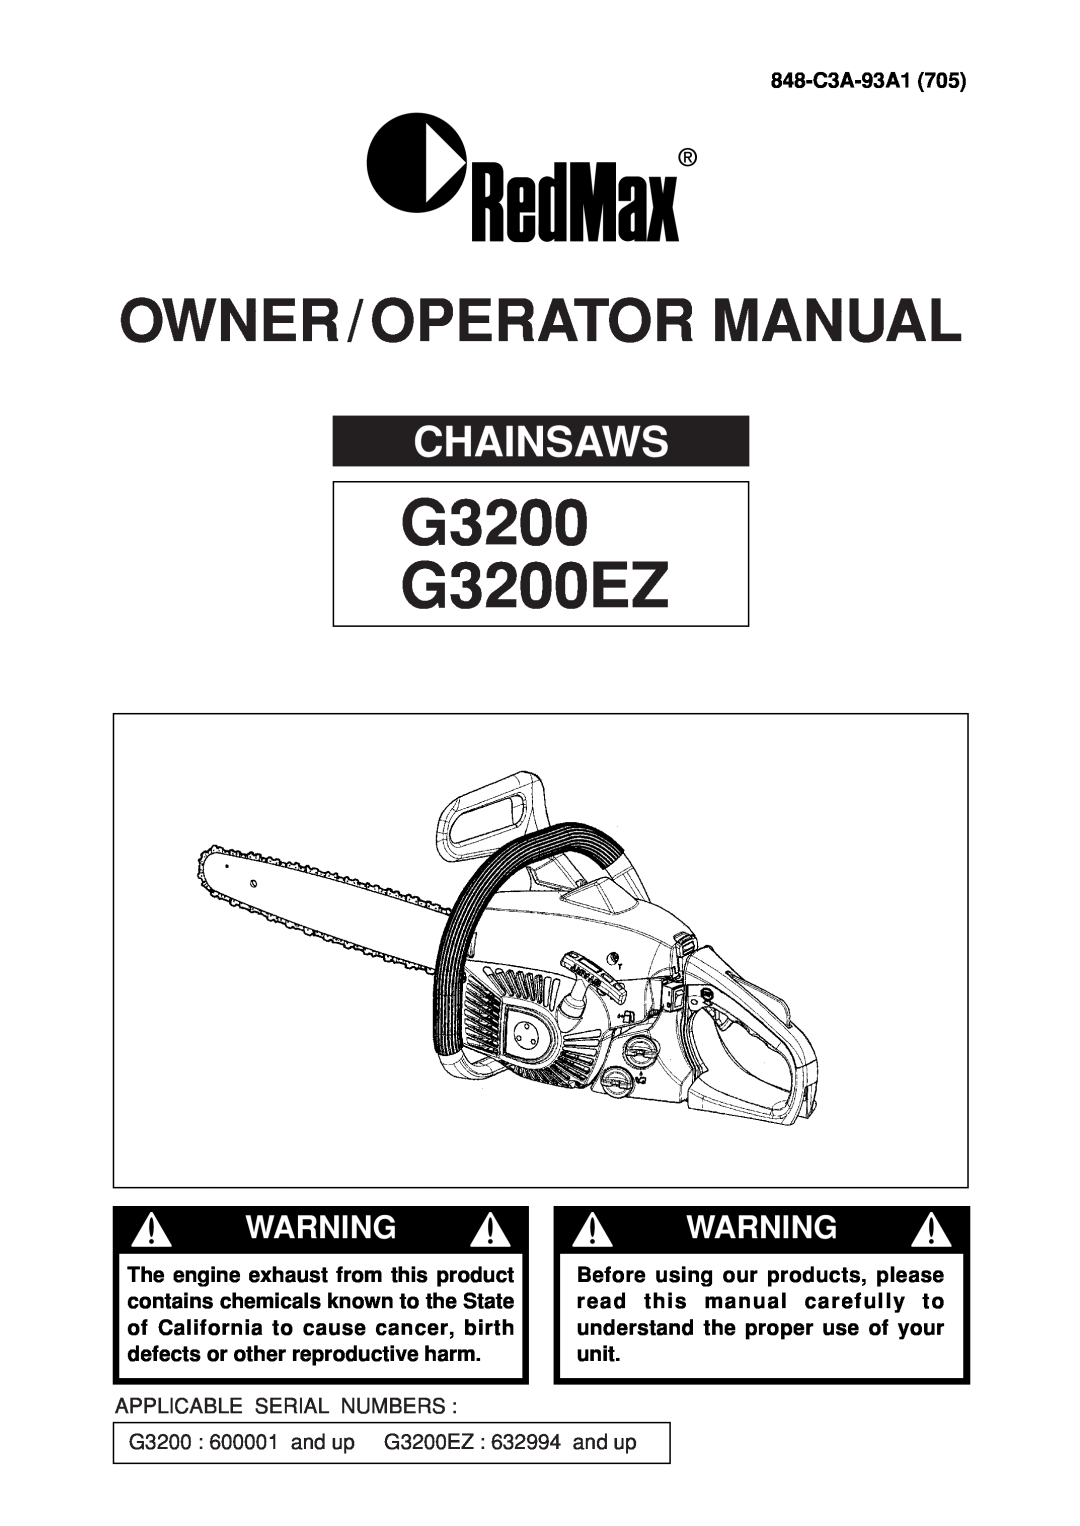 Zenoah manual G3200 G3200EZ, Chainsaws, Owner/Operator Manual, Warningwarning 